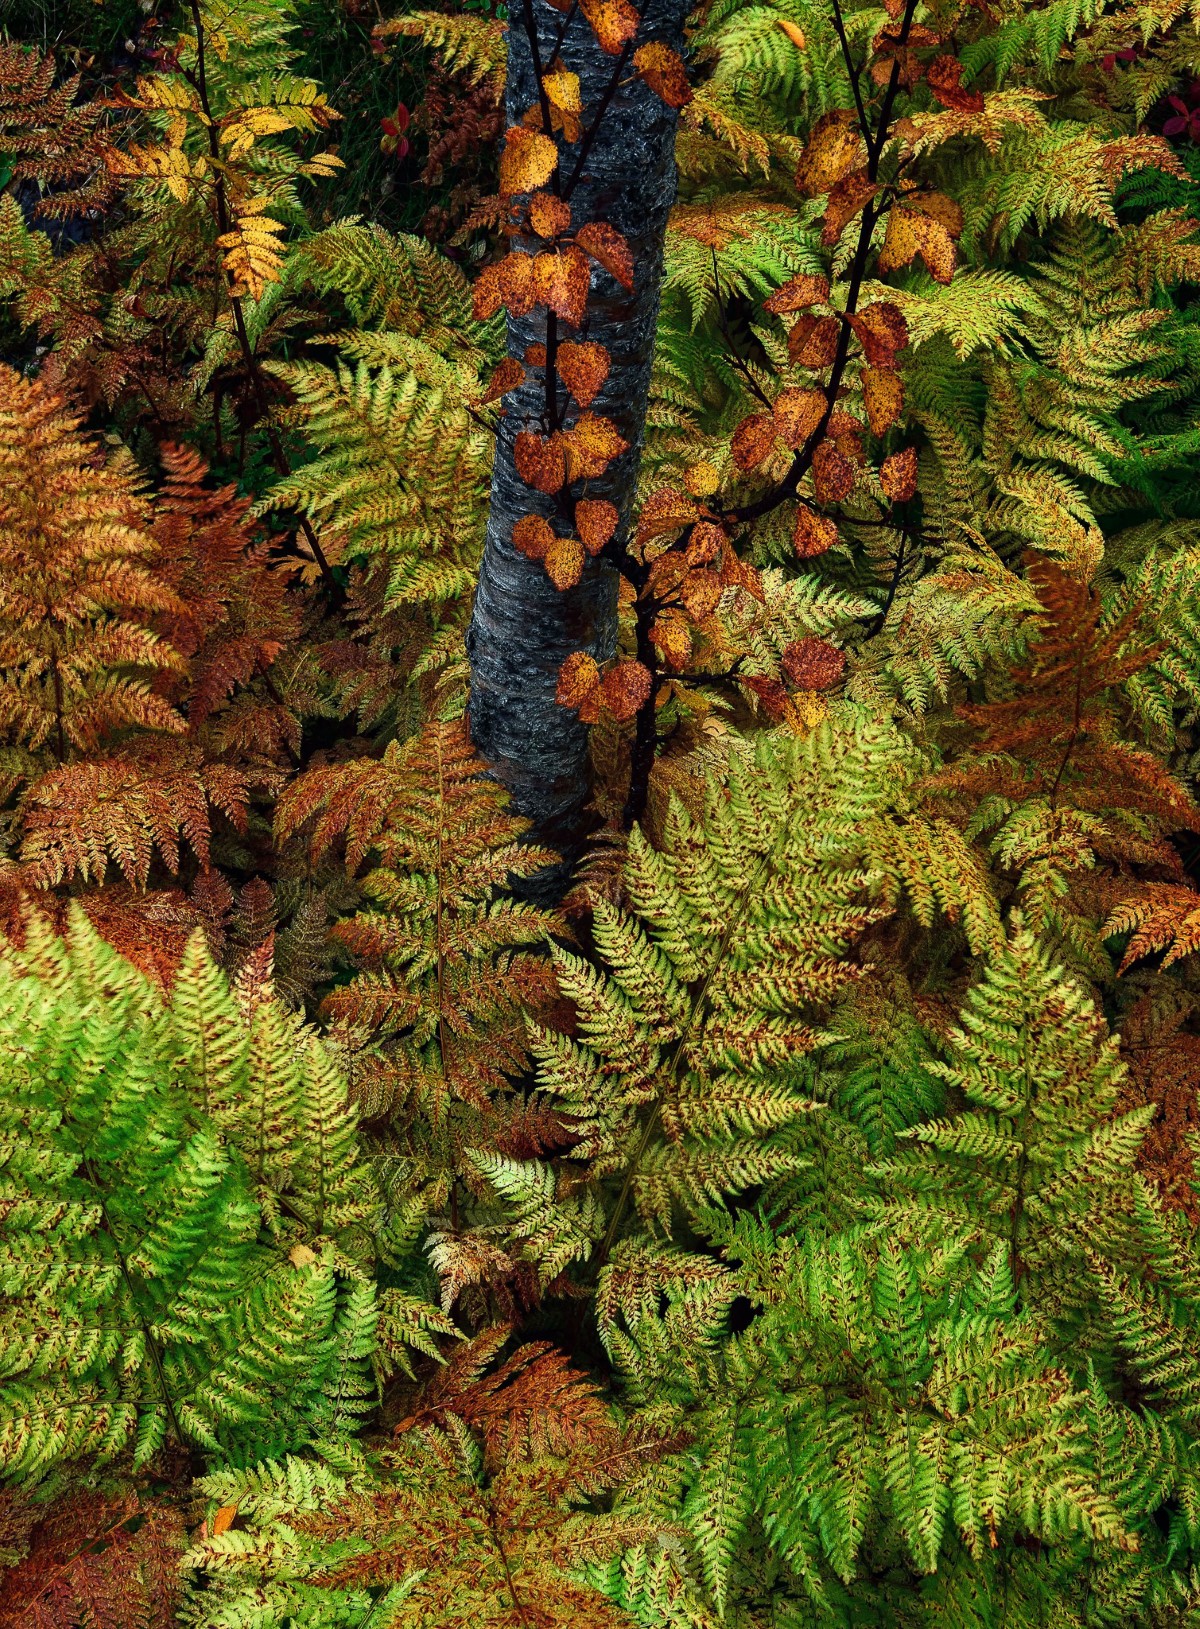 Ferns in an autumn forest